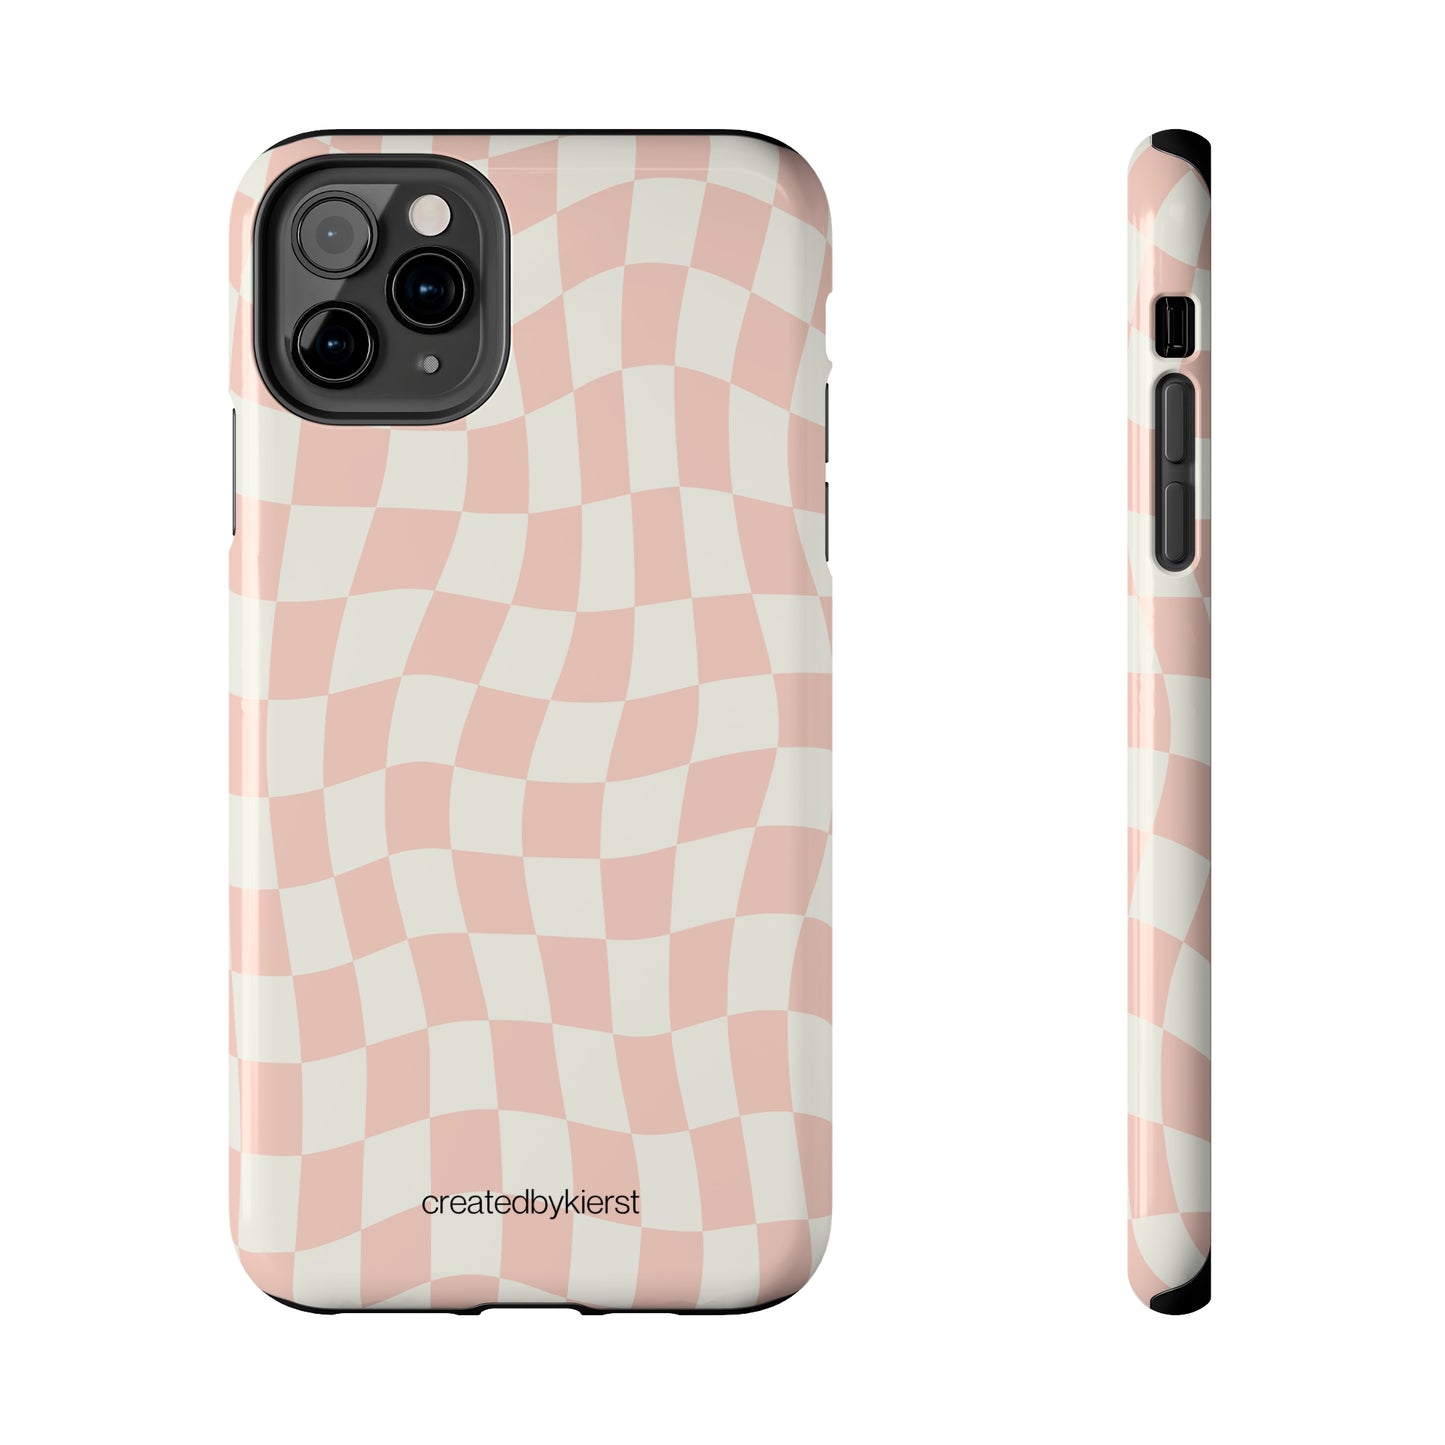 Peach and Cream Wavy Checkers iPhone Case